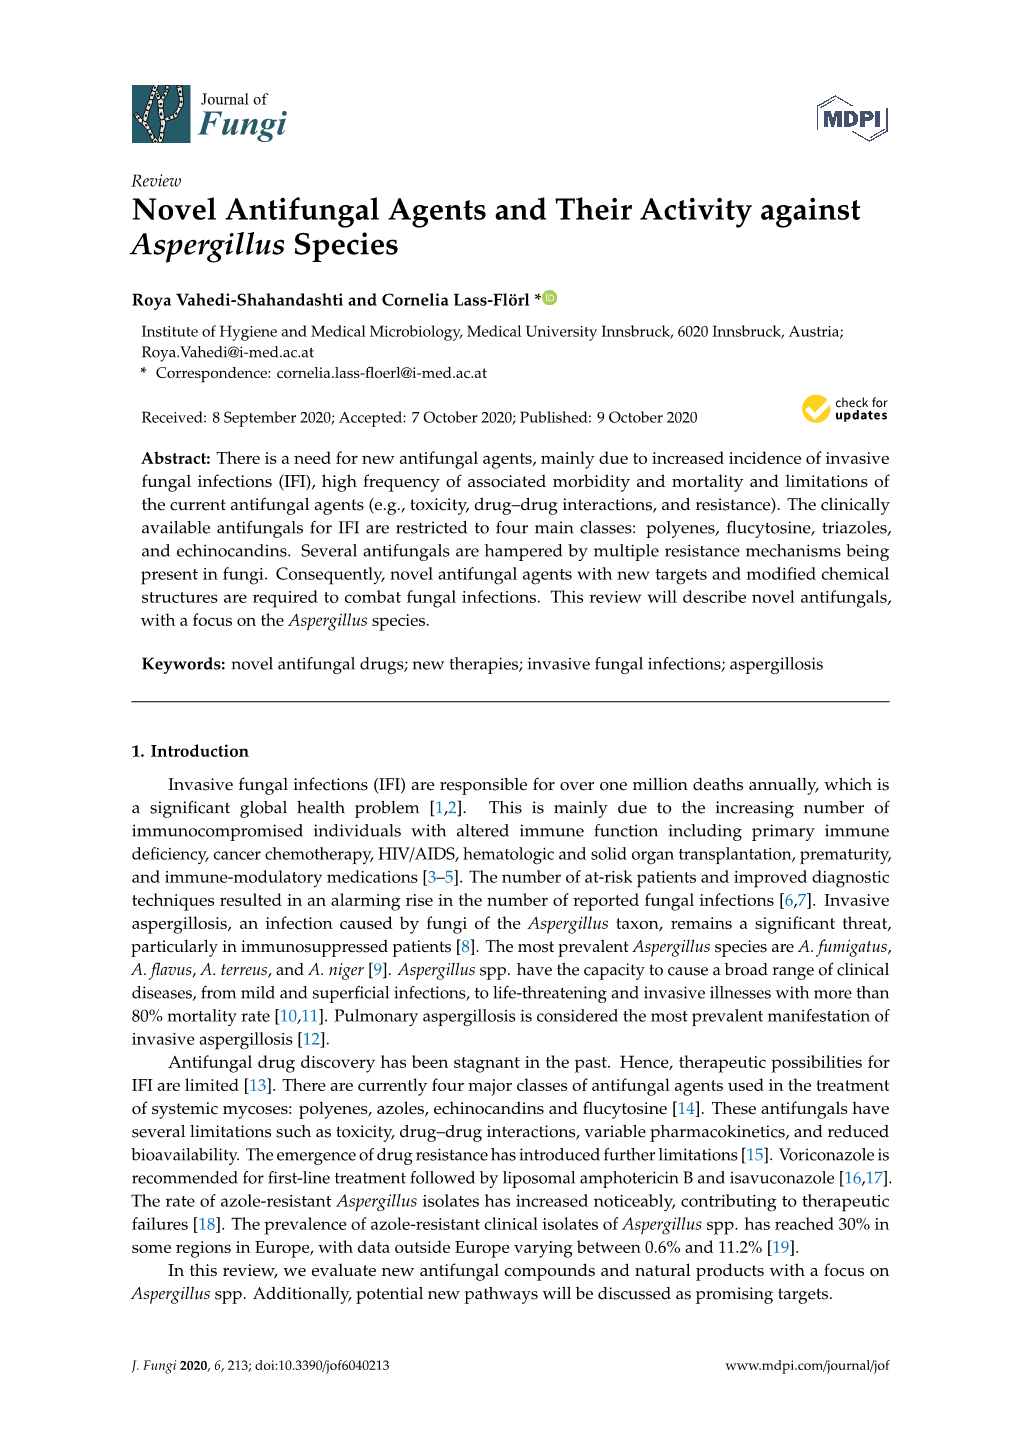 Novel Antifungal Agents and Their Activity Against Aspergillus Species